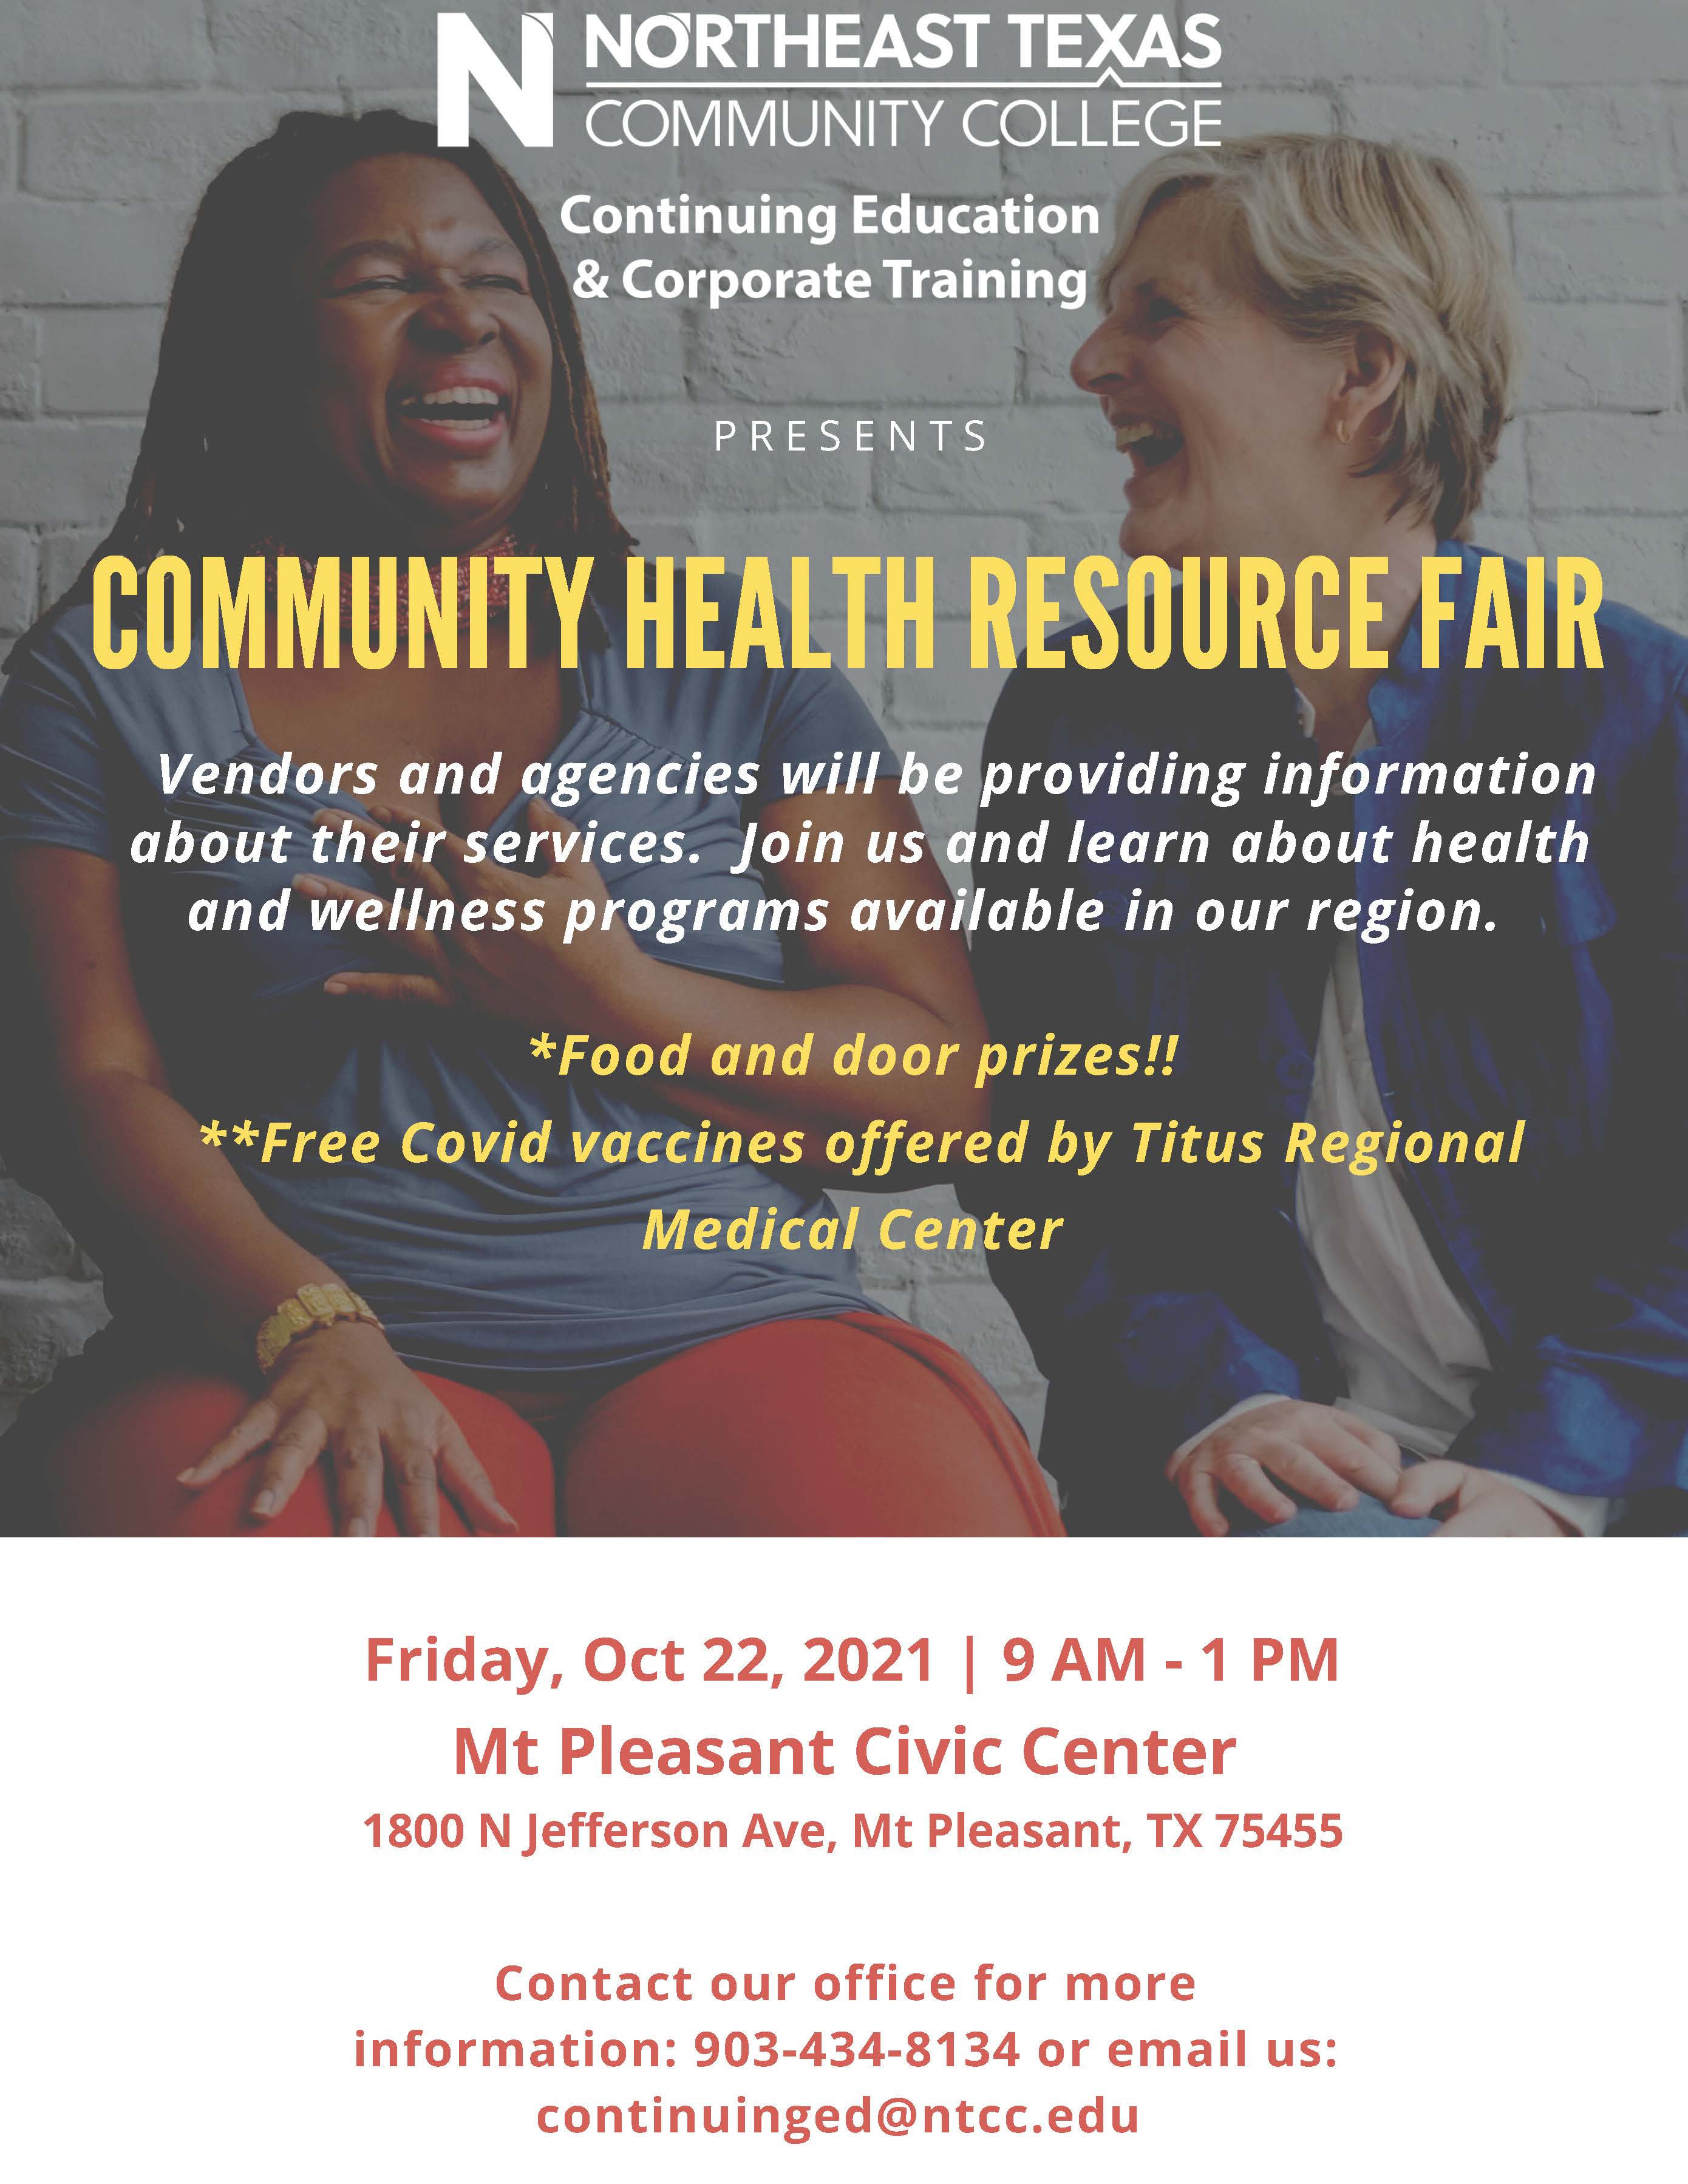 Community Health Resource Fair Northeast Texas Community College